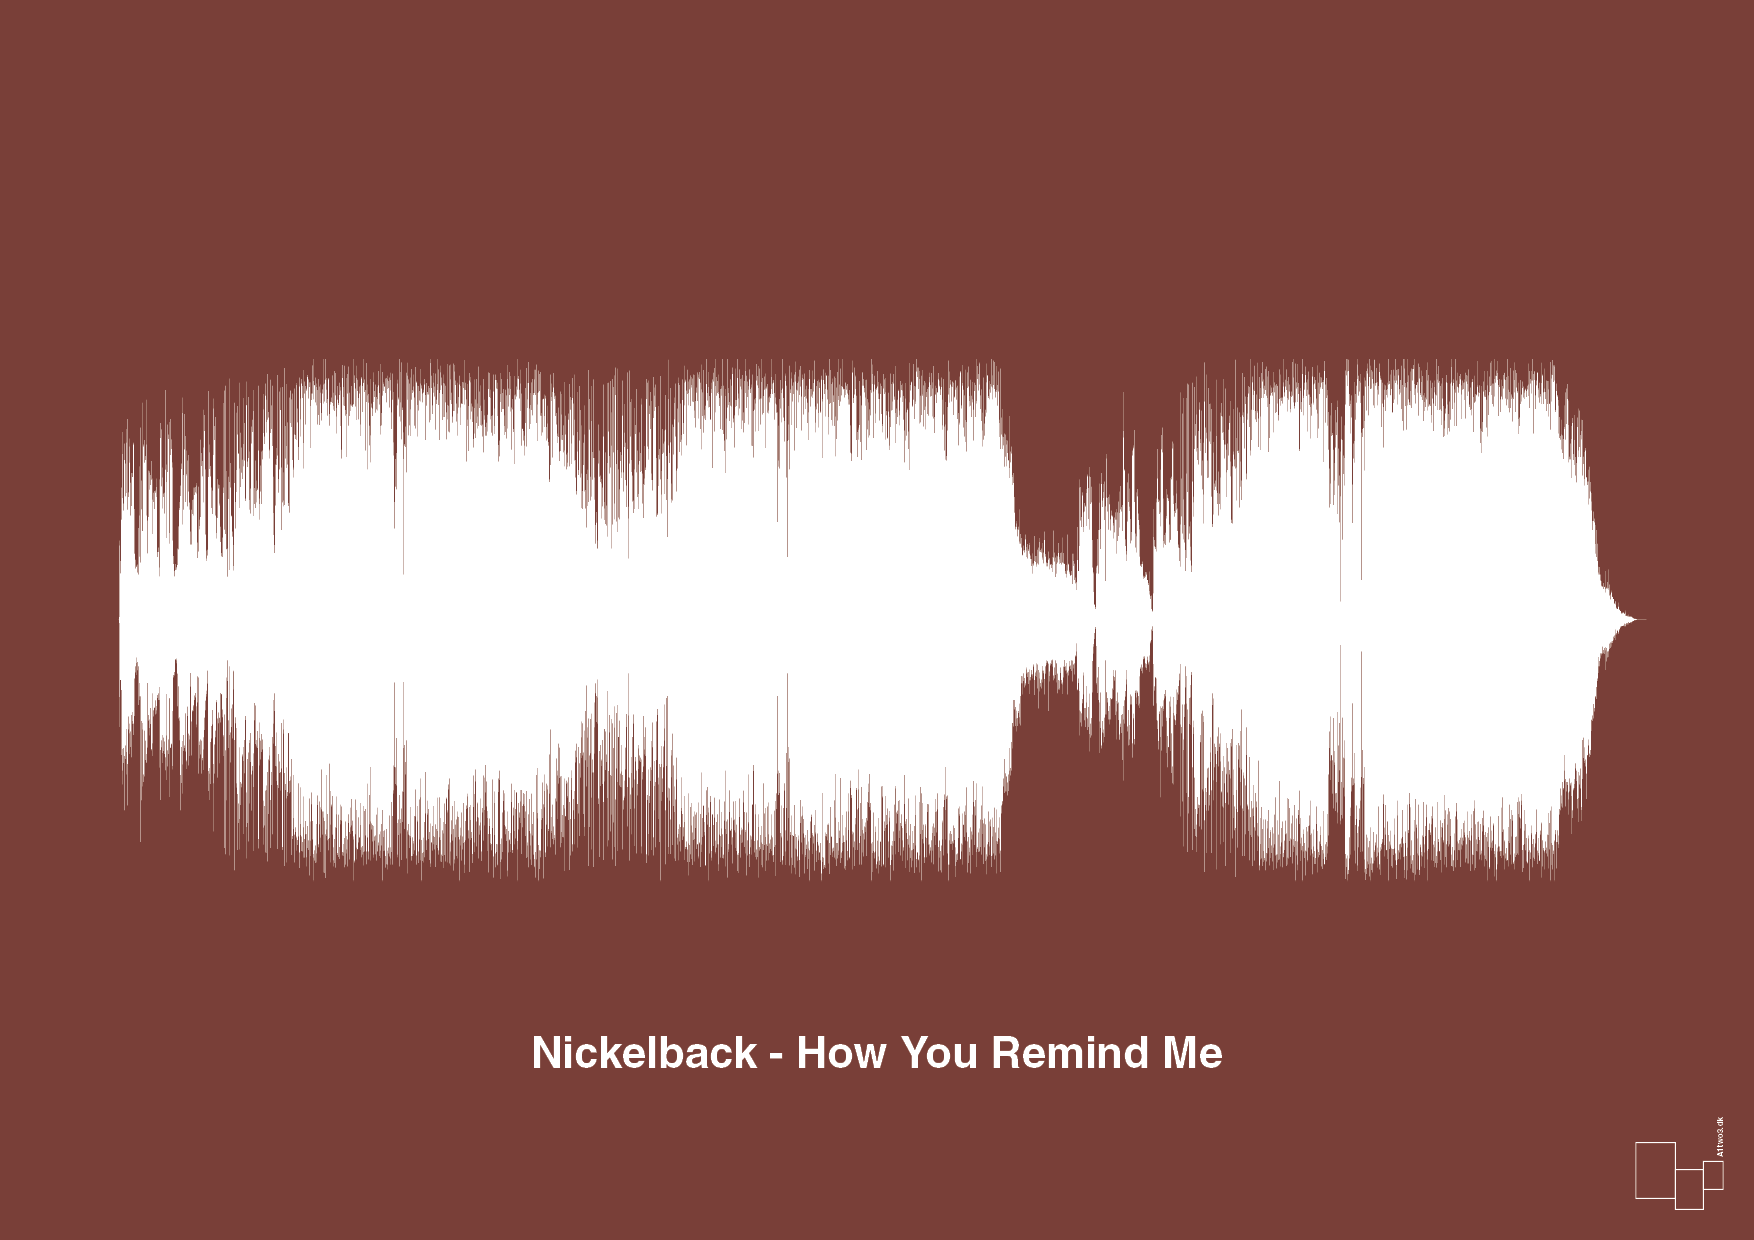 nickelback - how you remind me - Plakat med Musik i Red Pepper